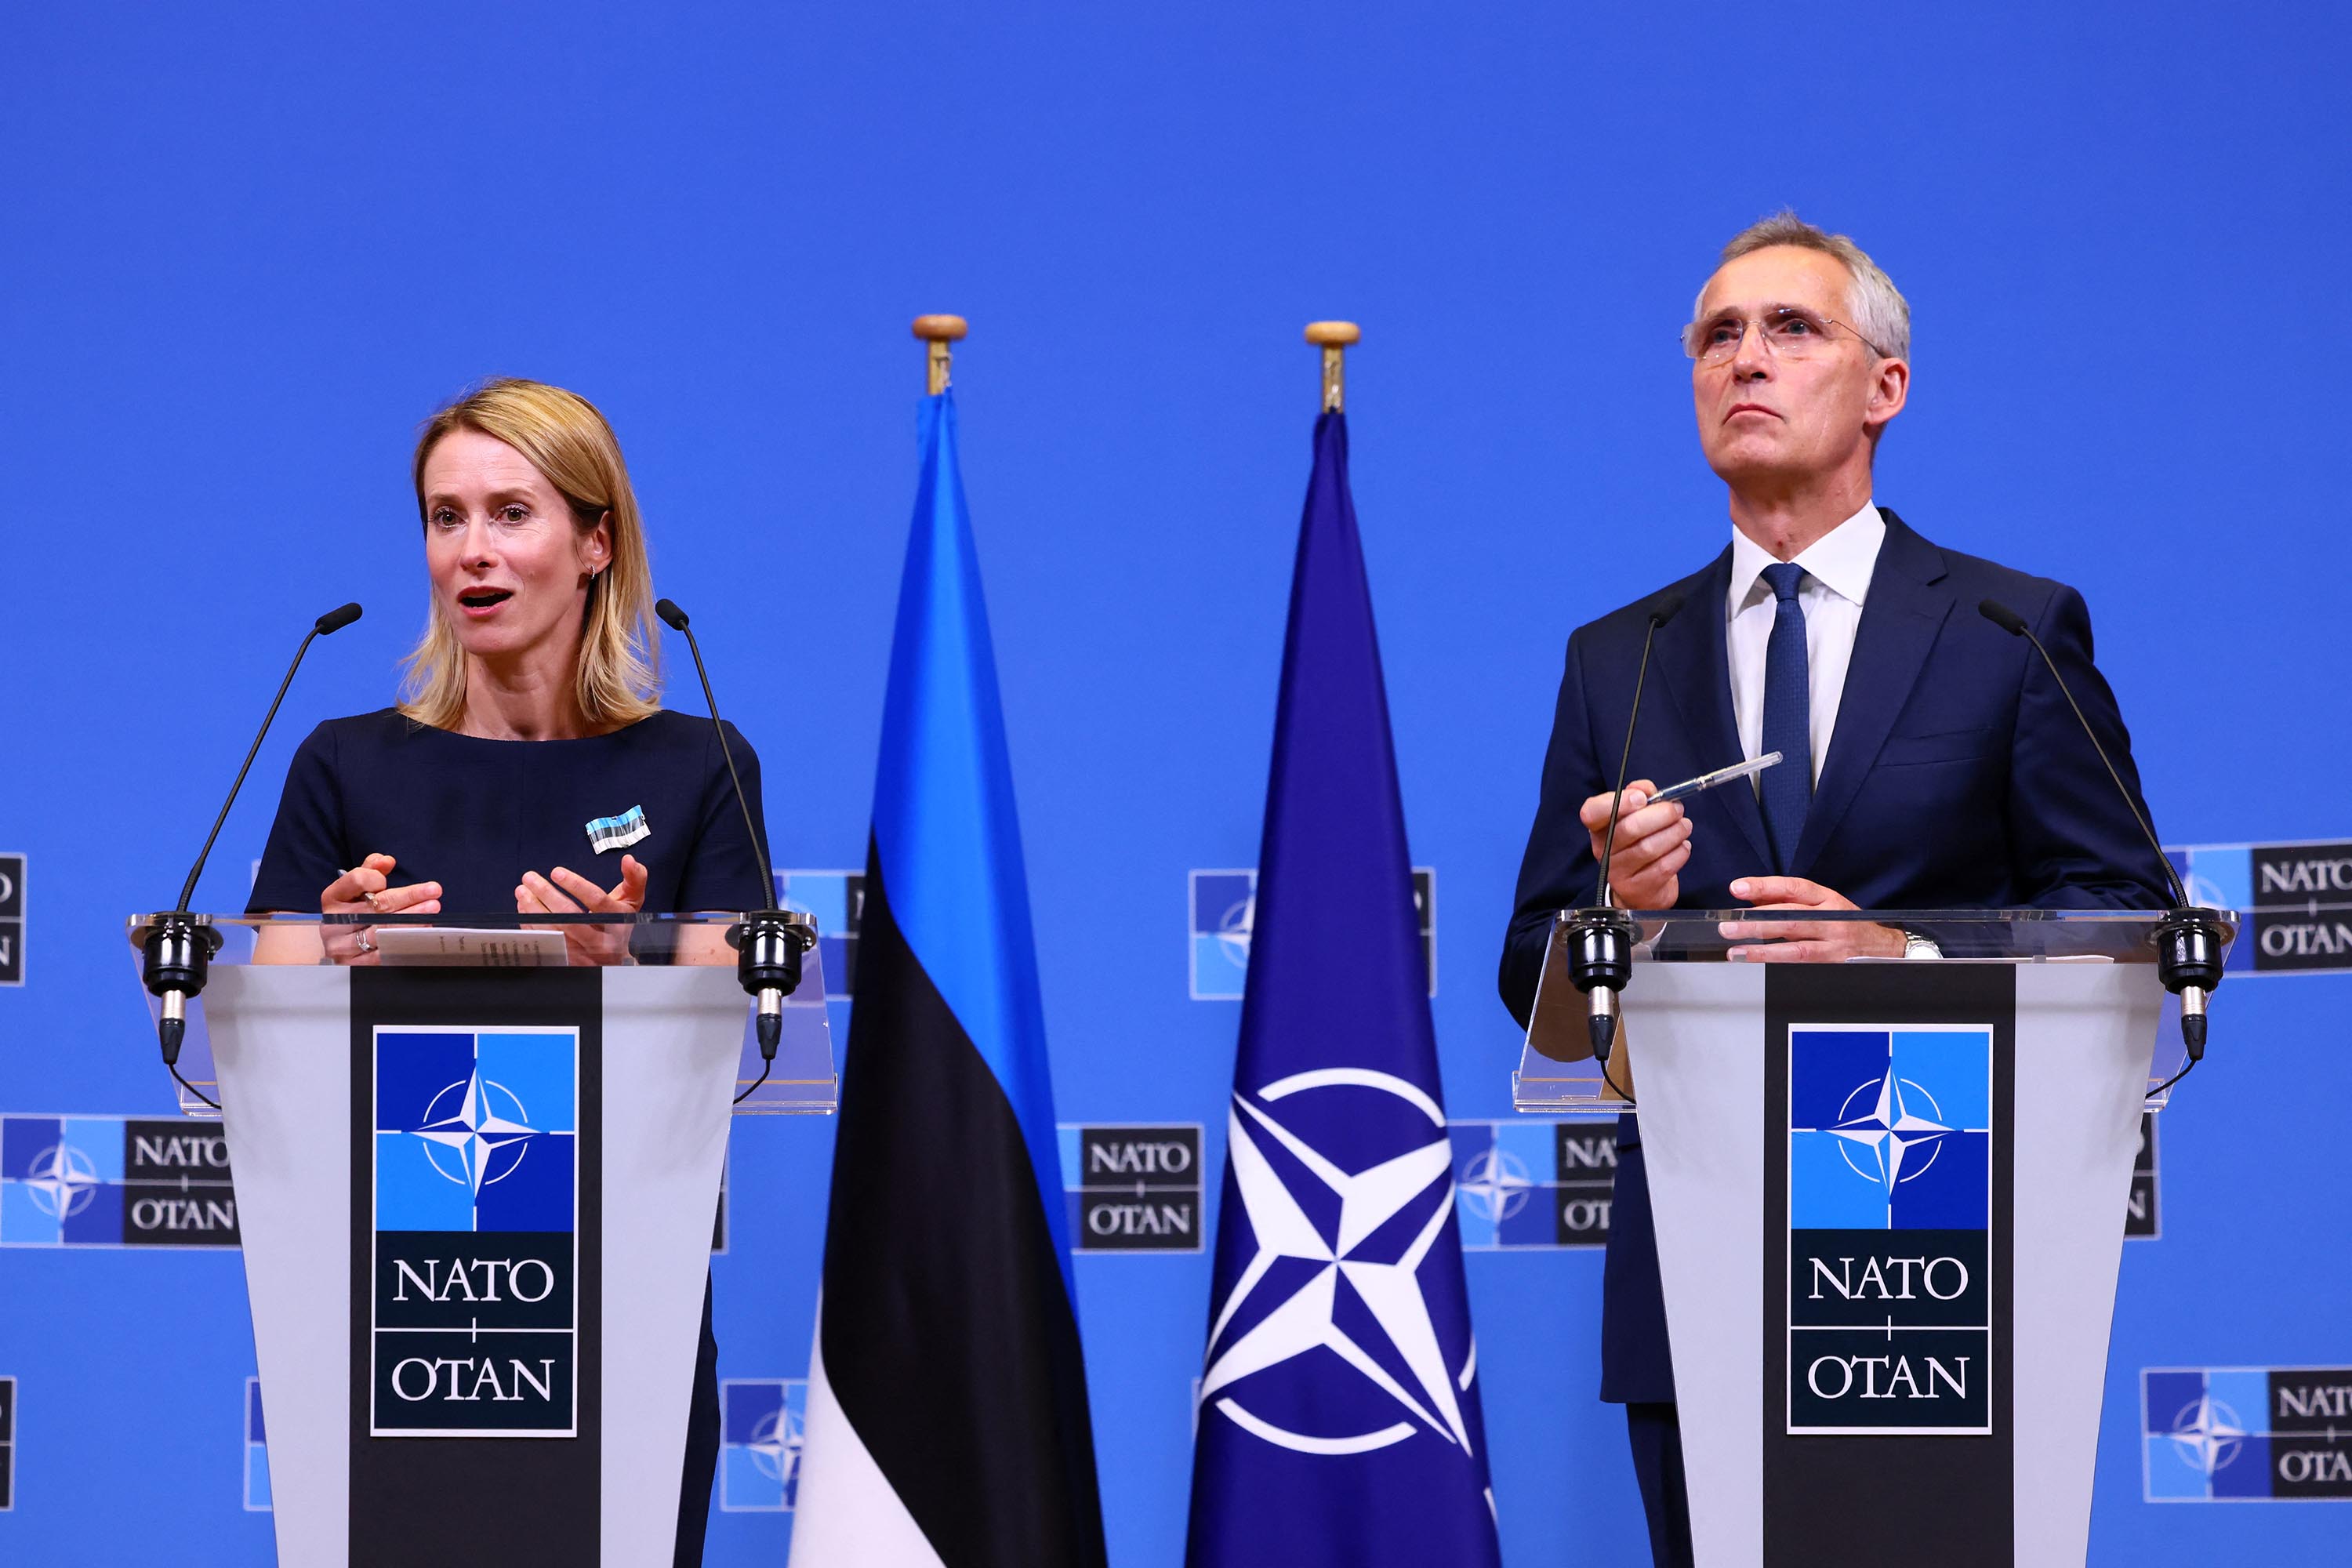 Estonian Prime Minister Kaja Kallas and NATO Secretary General Jens Stoltenberg hold a press conference at the NATO Headquarters in Brussels, Belgium, on June 28. 